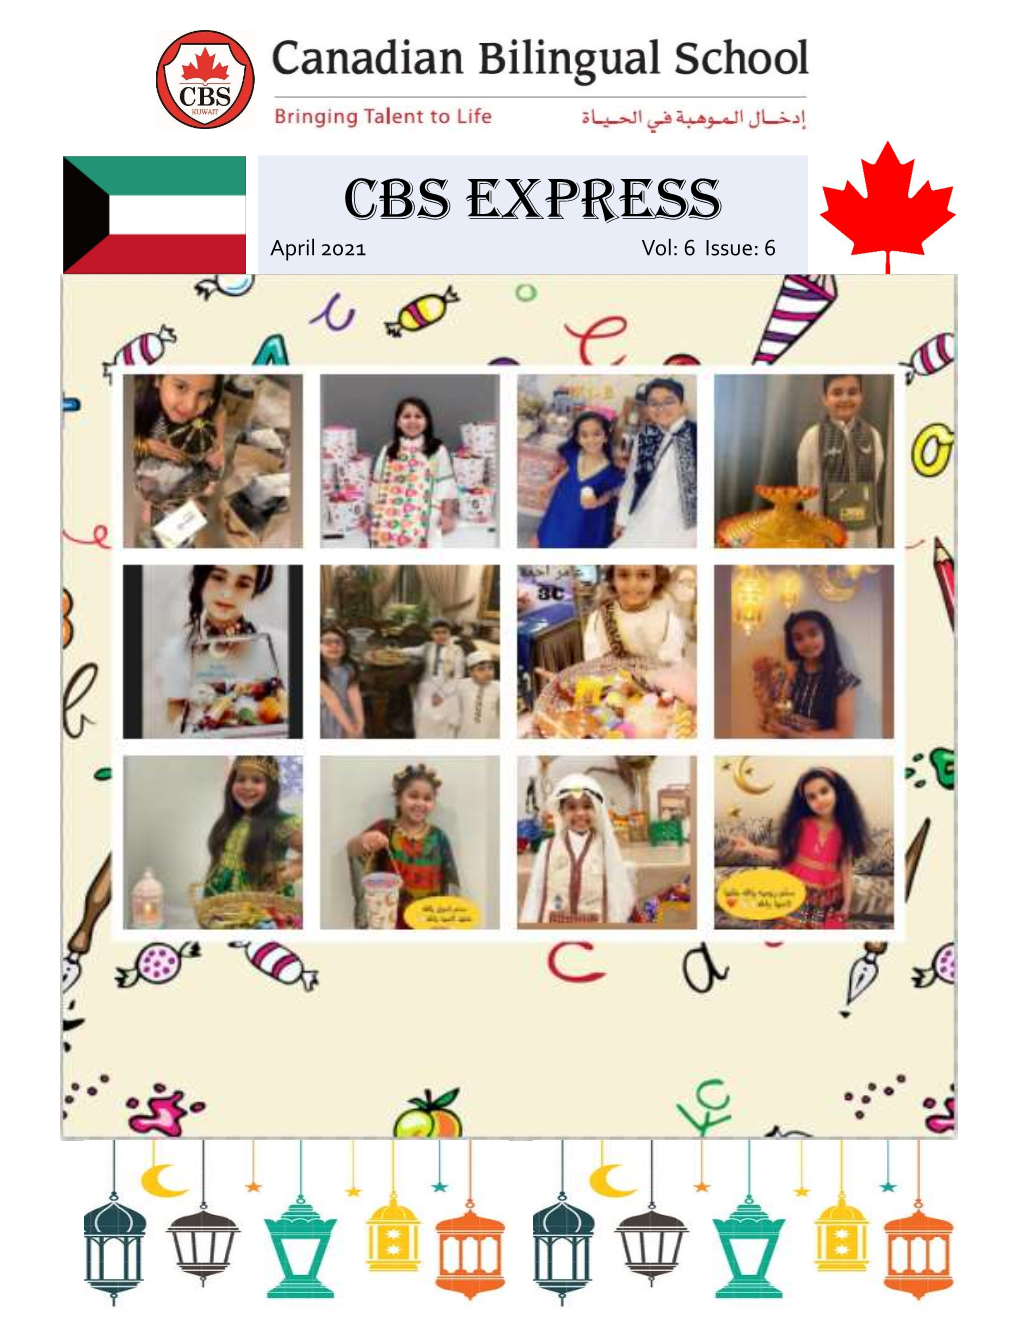 CBS EXPRESS April 2021 Vol: 6 Issue: 6 2 CBS EXPRESS Vol: 6 | Issue # 6 JK’S Writing